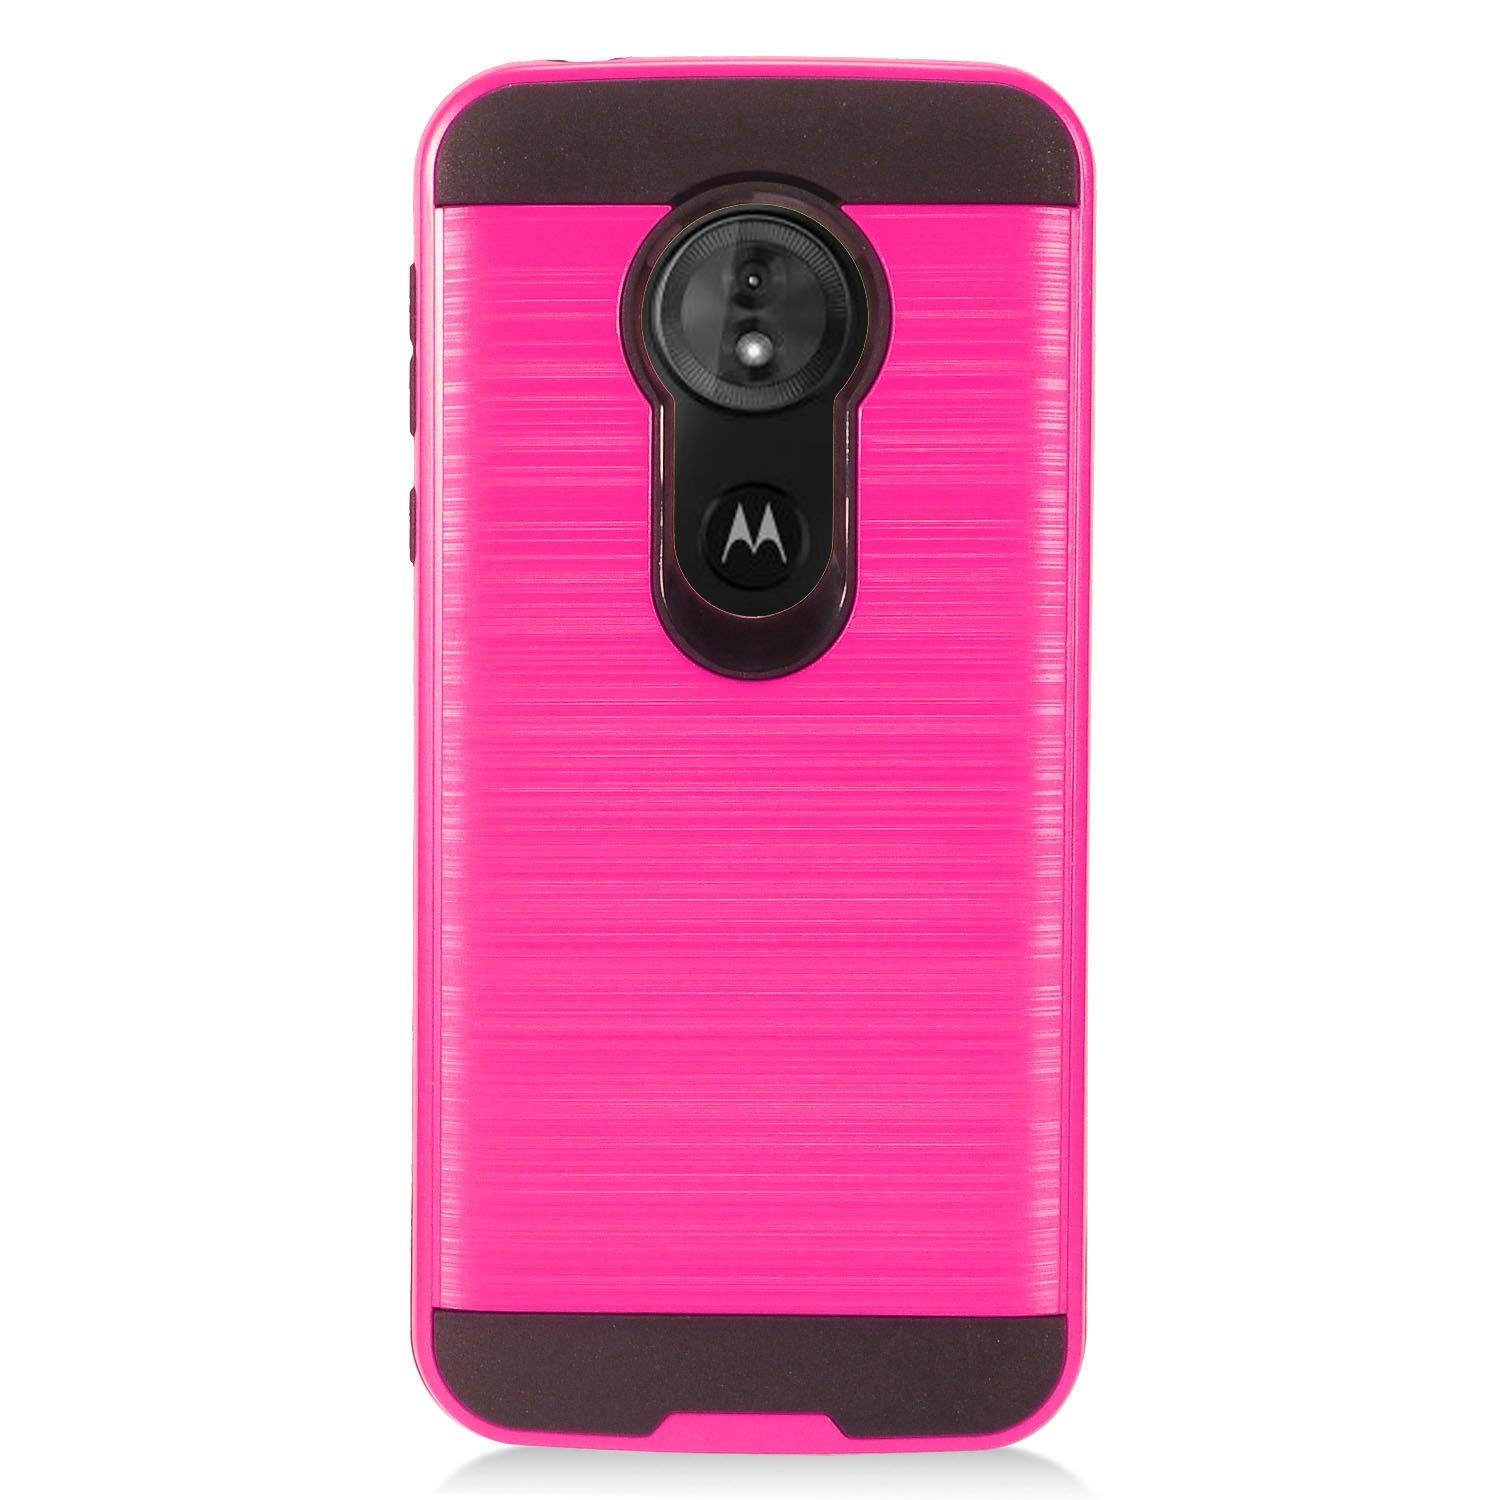 Moto G6 Play / Moto G6 Forge (MOTO G Play 6th Gen) Armor Hybrid Case (Hot Pink)